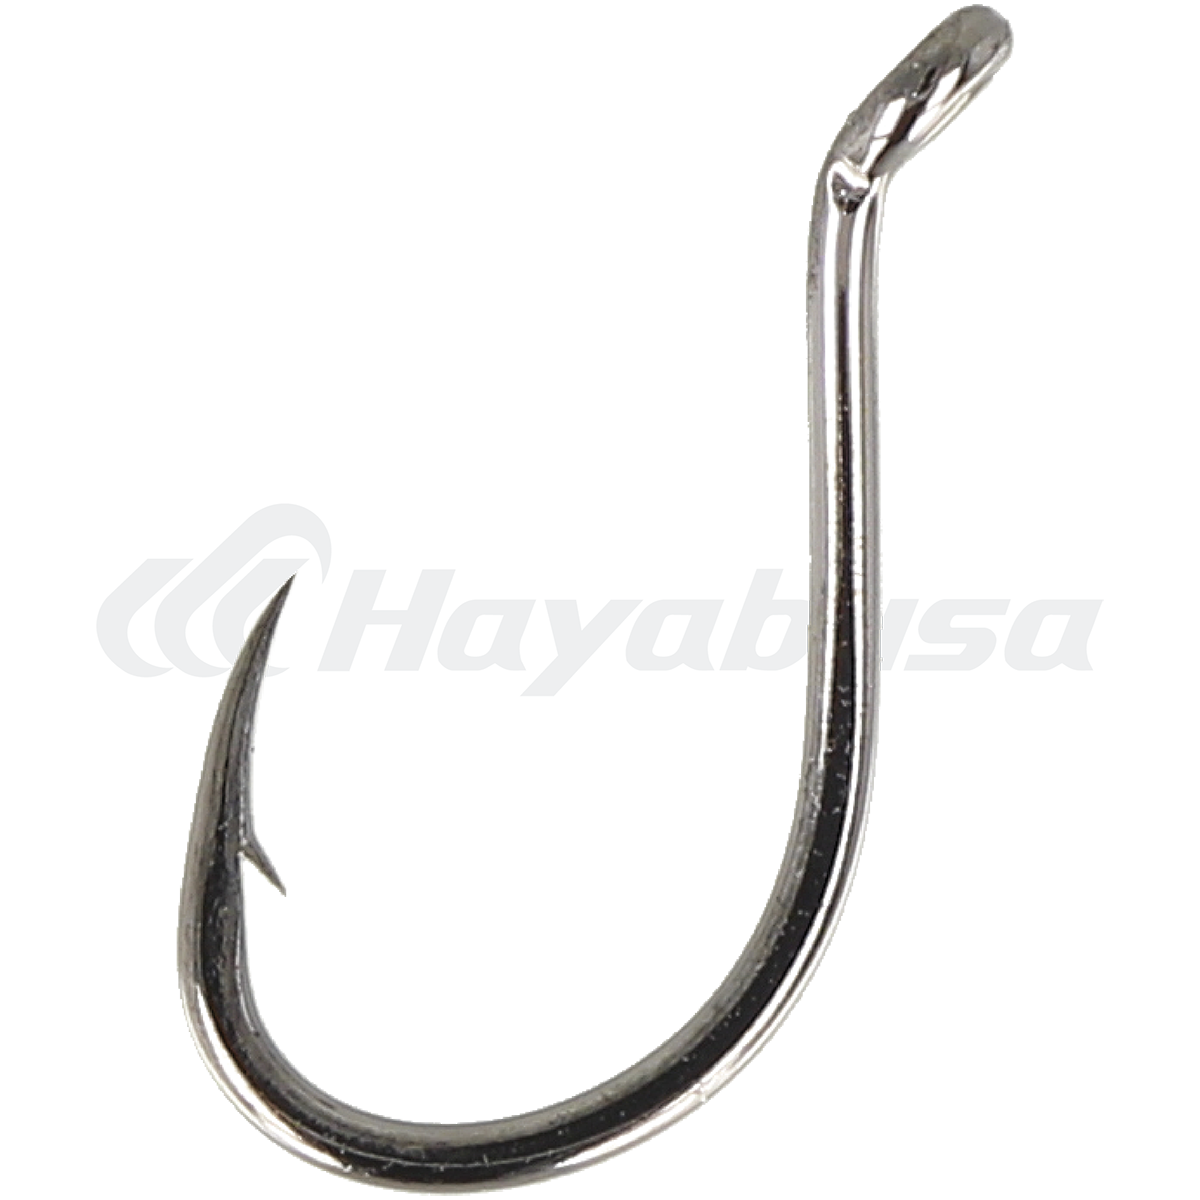 Крючок Hayabusa H.BEK562